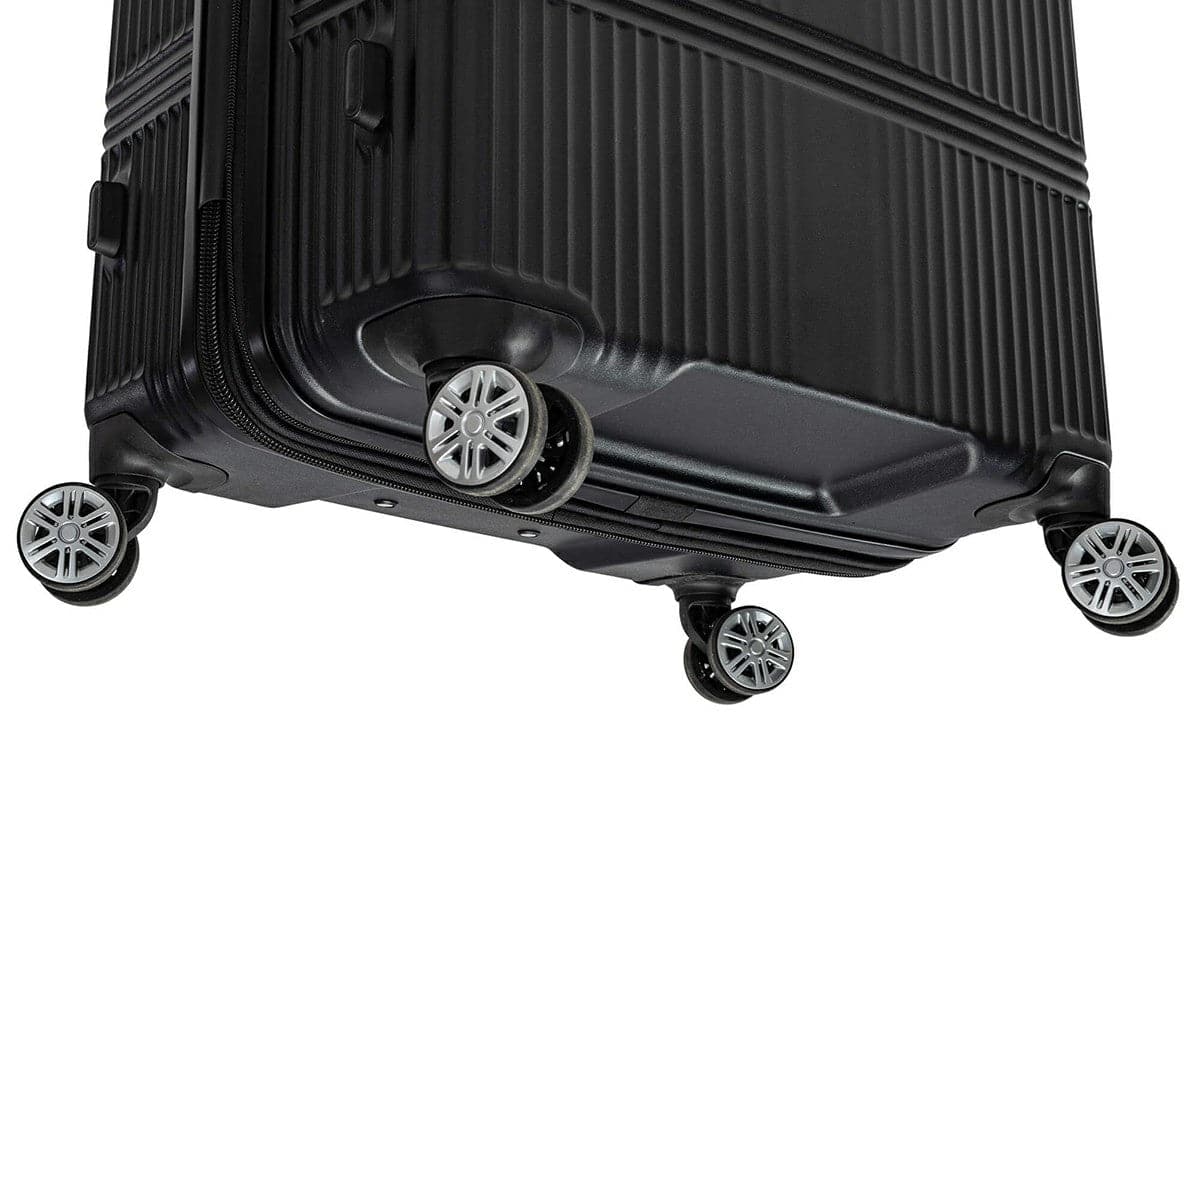 Mancini Adelaide Lightweight Spinner Luggage Set